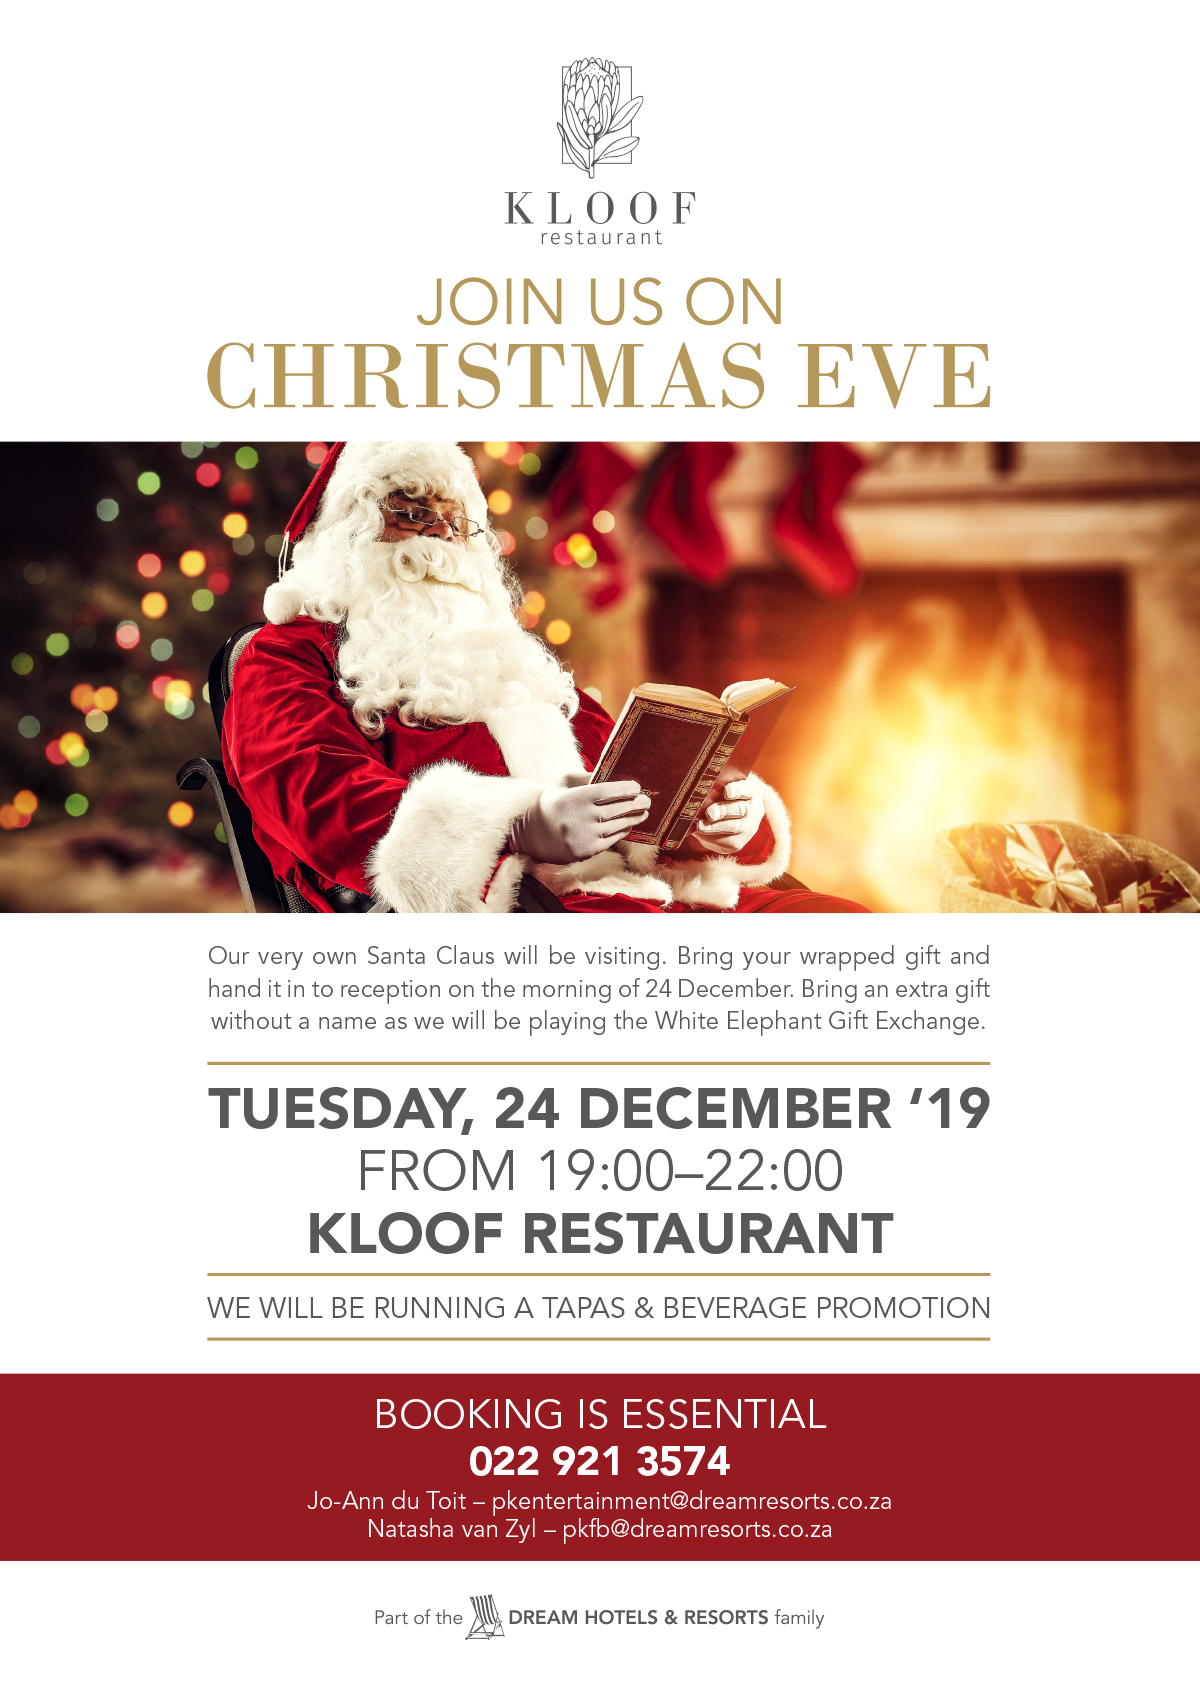 Kloof restaurant join us on Christmas eve brochure